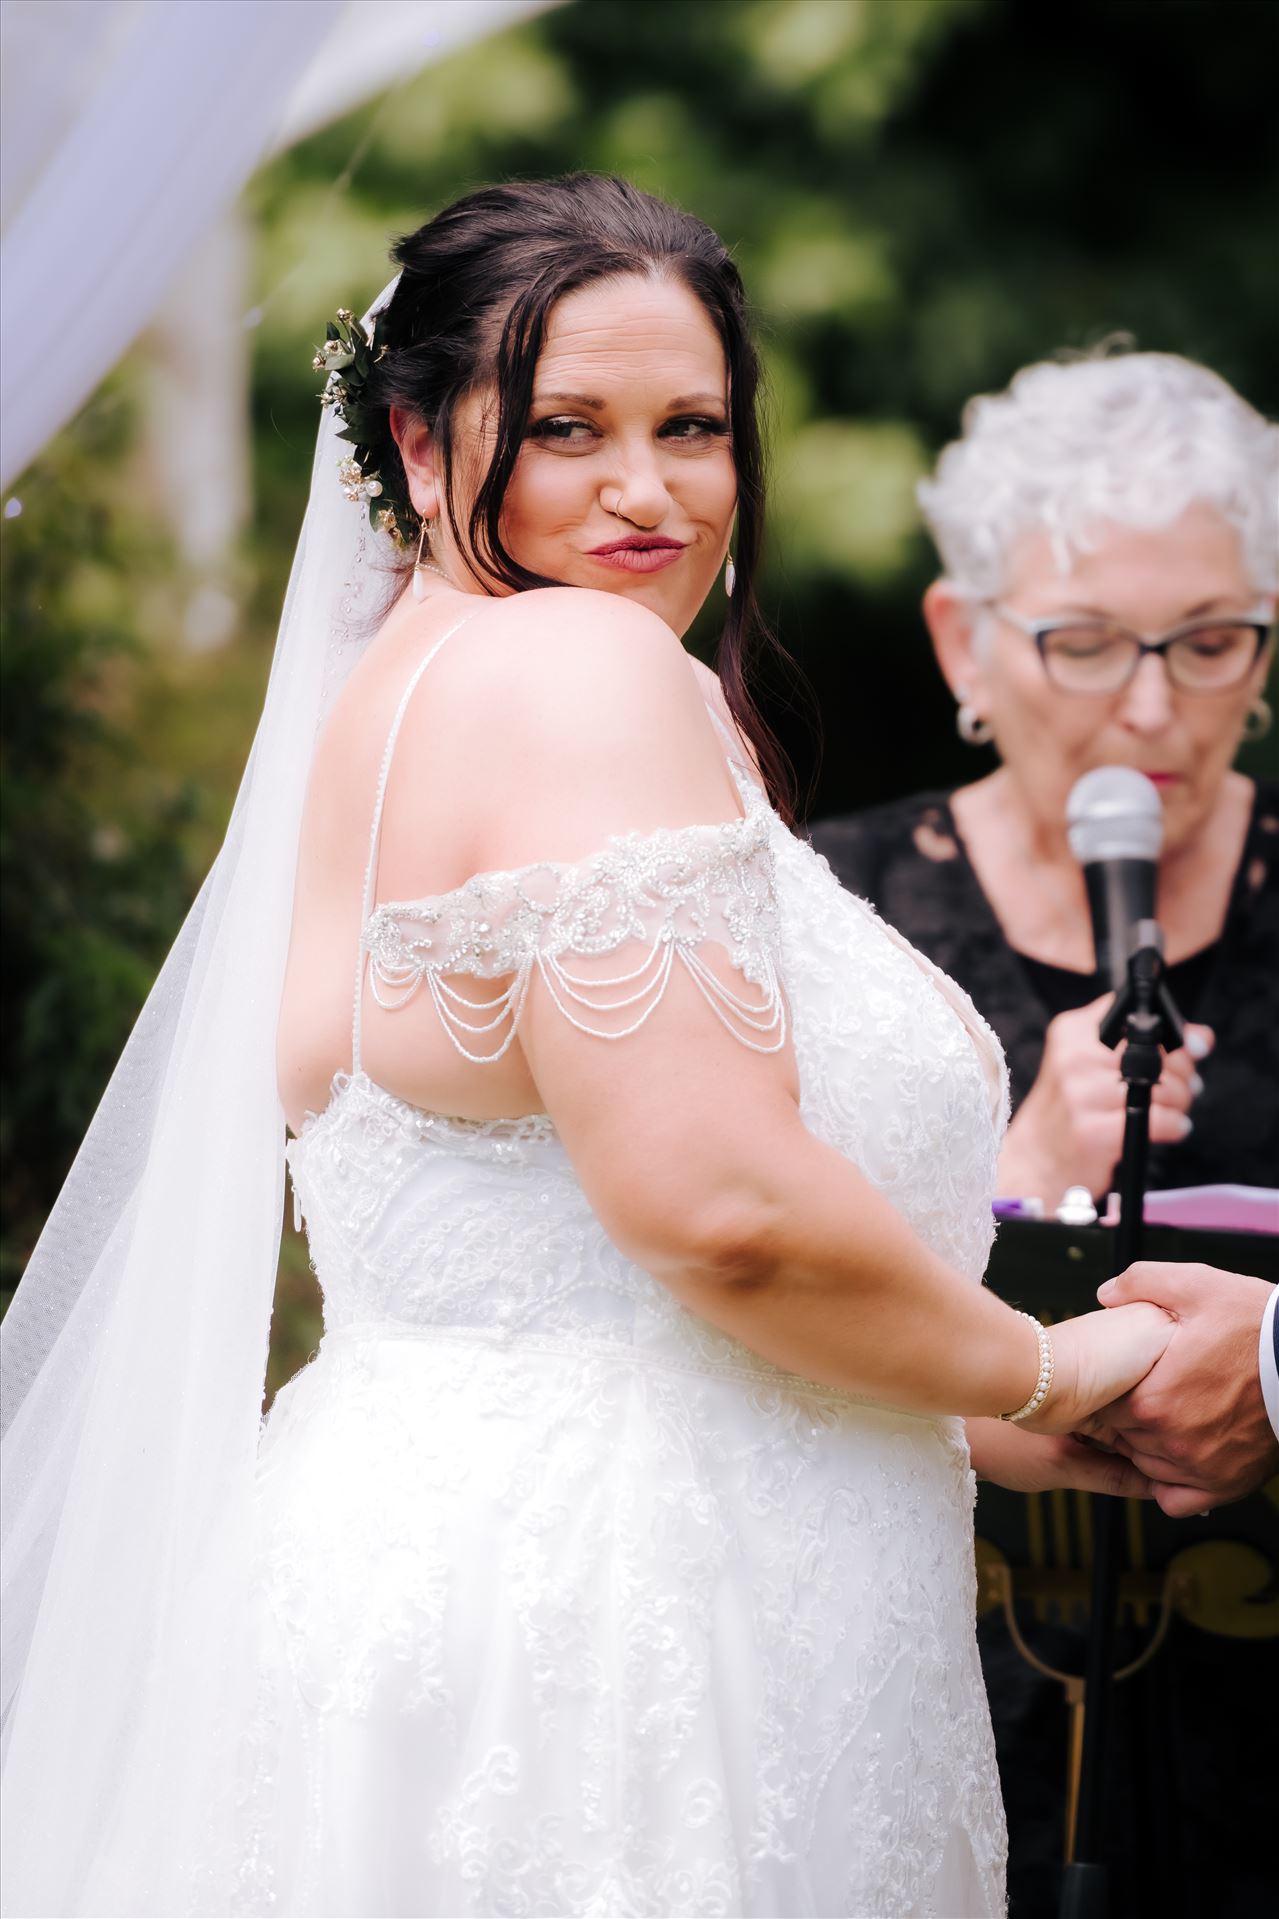 Sneak Peek-5415.JPG - Mirror's Edge Wedding Photography, a San Luis Obispo and Santa Barbara County photographer capture the Nagy's Madonna Inn Wedding.  Madonna Inn Sassy Bride. by Sarah Williams